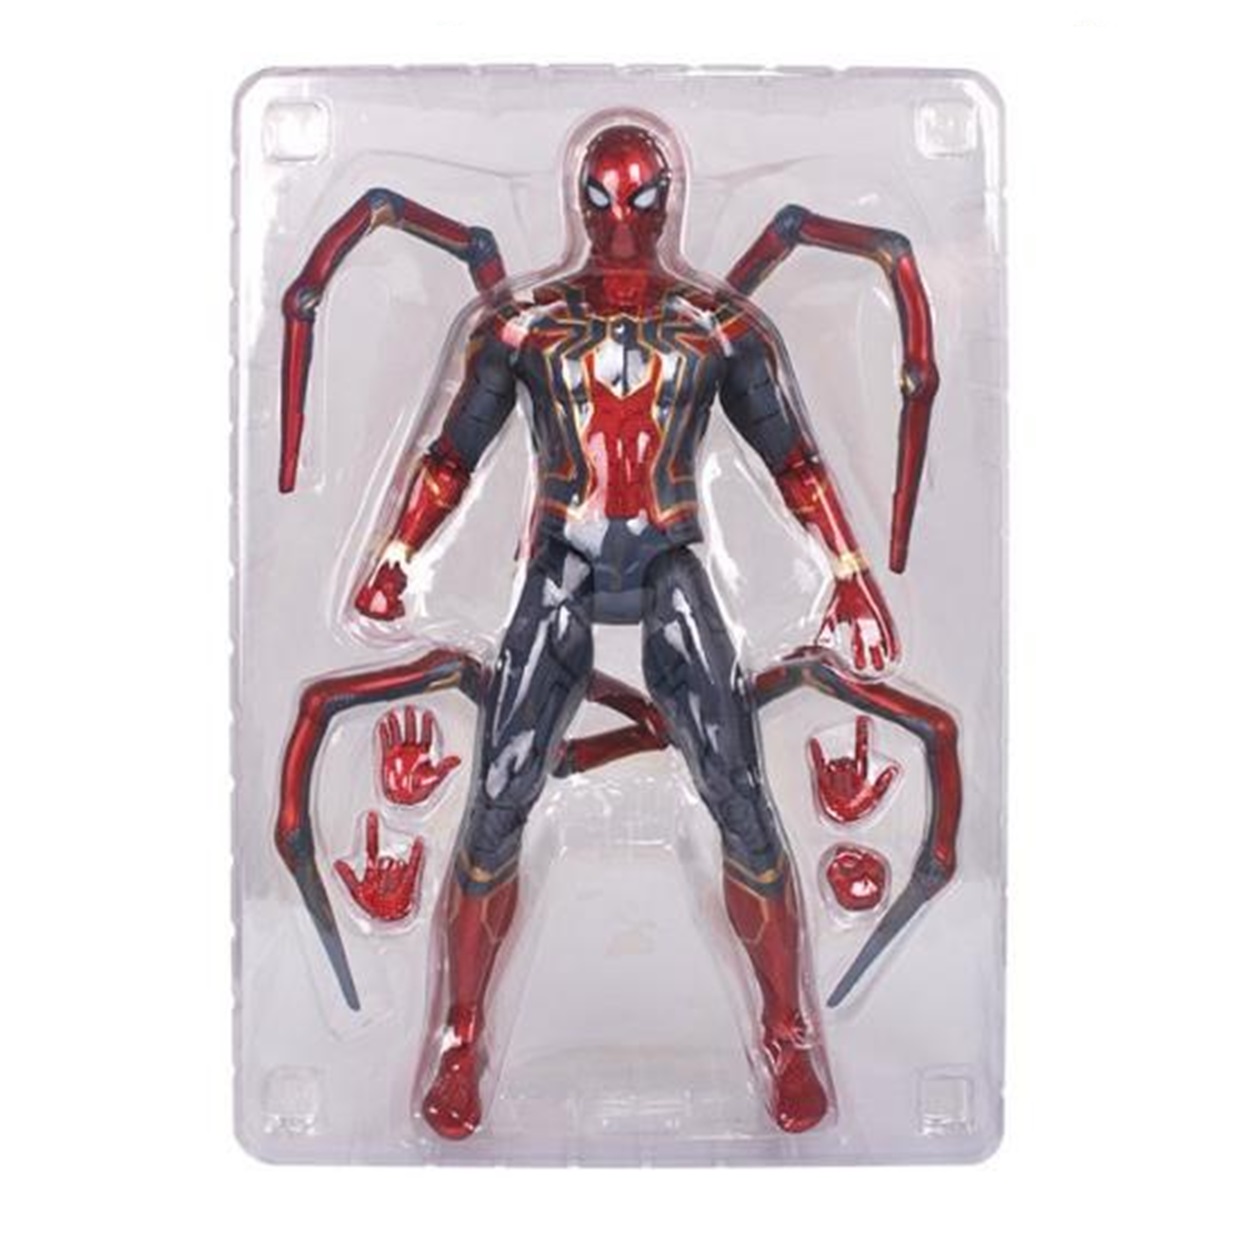 Iron Spider Figura Avengers Infinity War Con Luz Led 15 PuLG